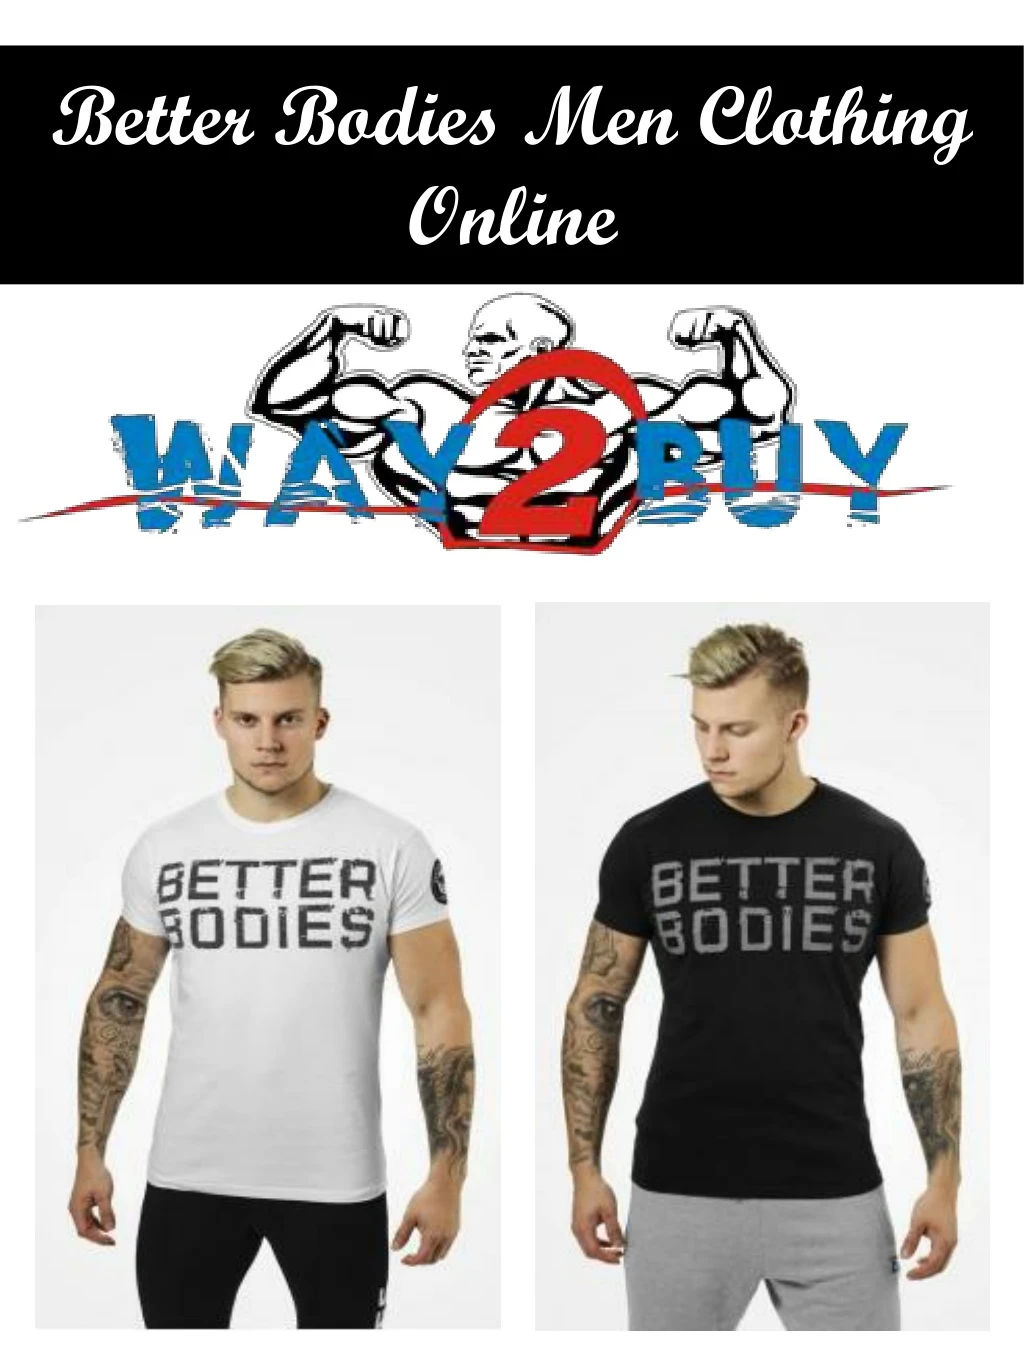 better bodies men clothing online